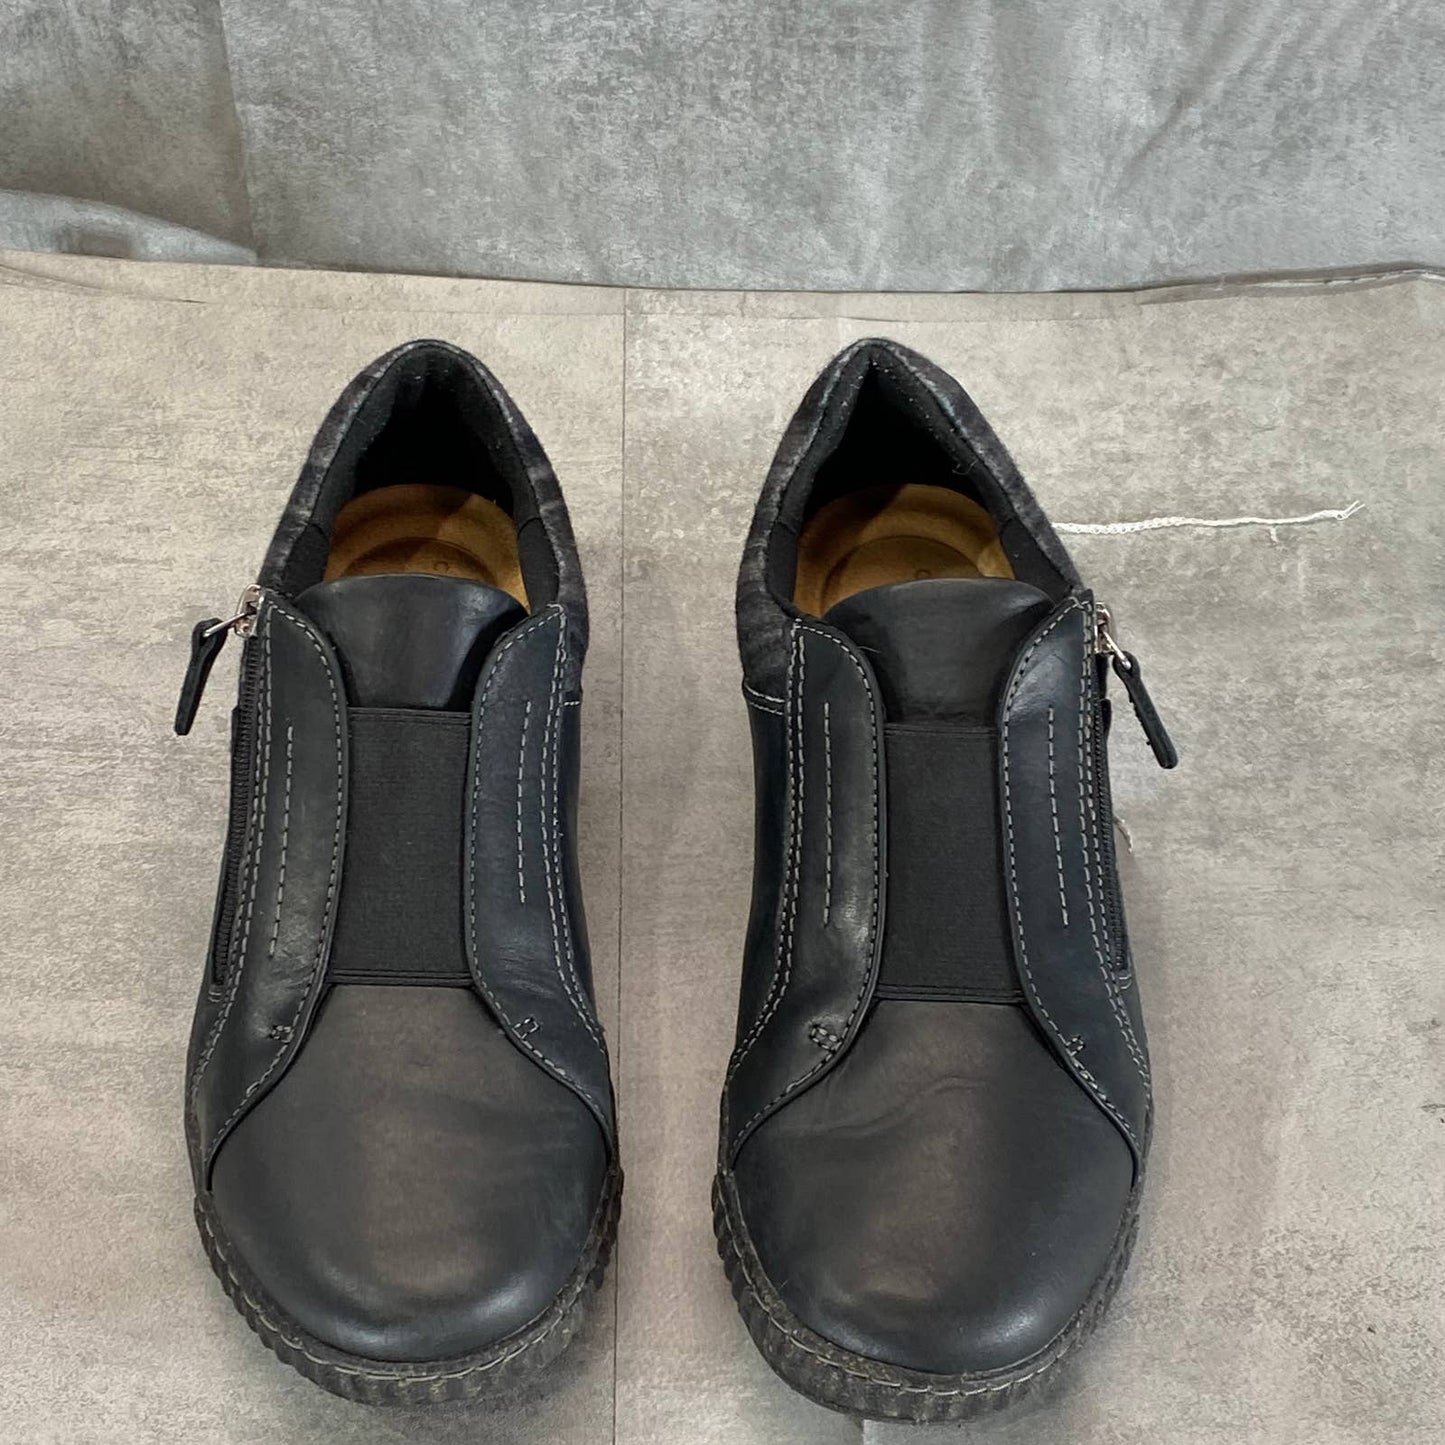 CLARKS COLLECTION Women's Black Leather Caroline Cove Slip-On Zip Sneakers SZ 11